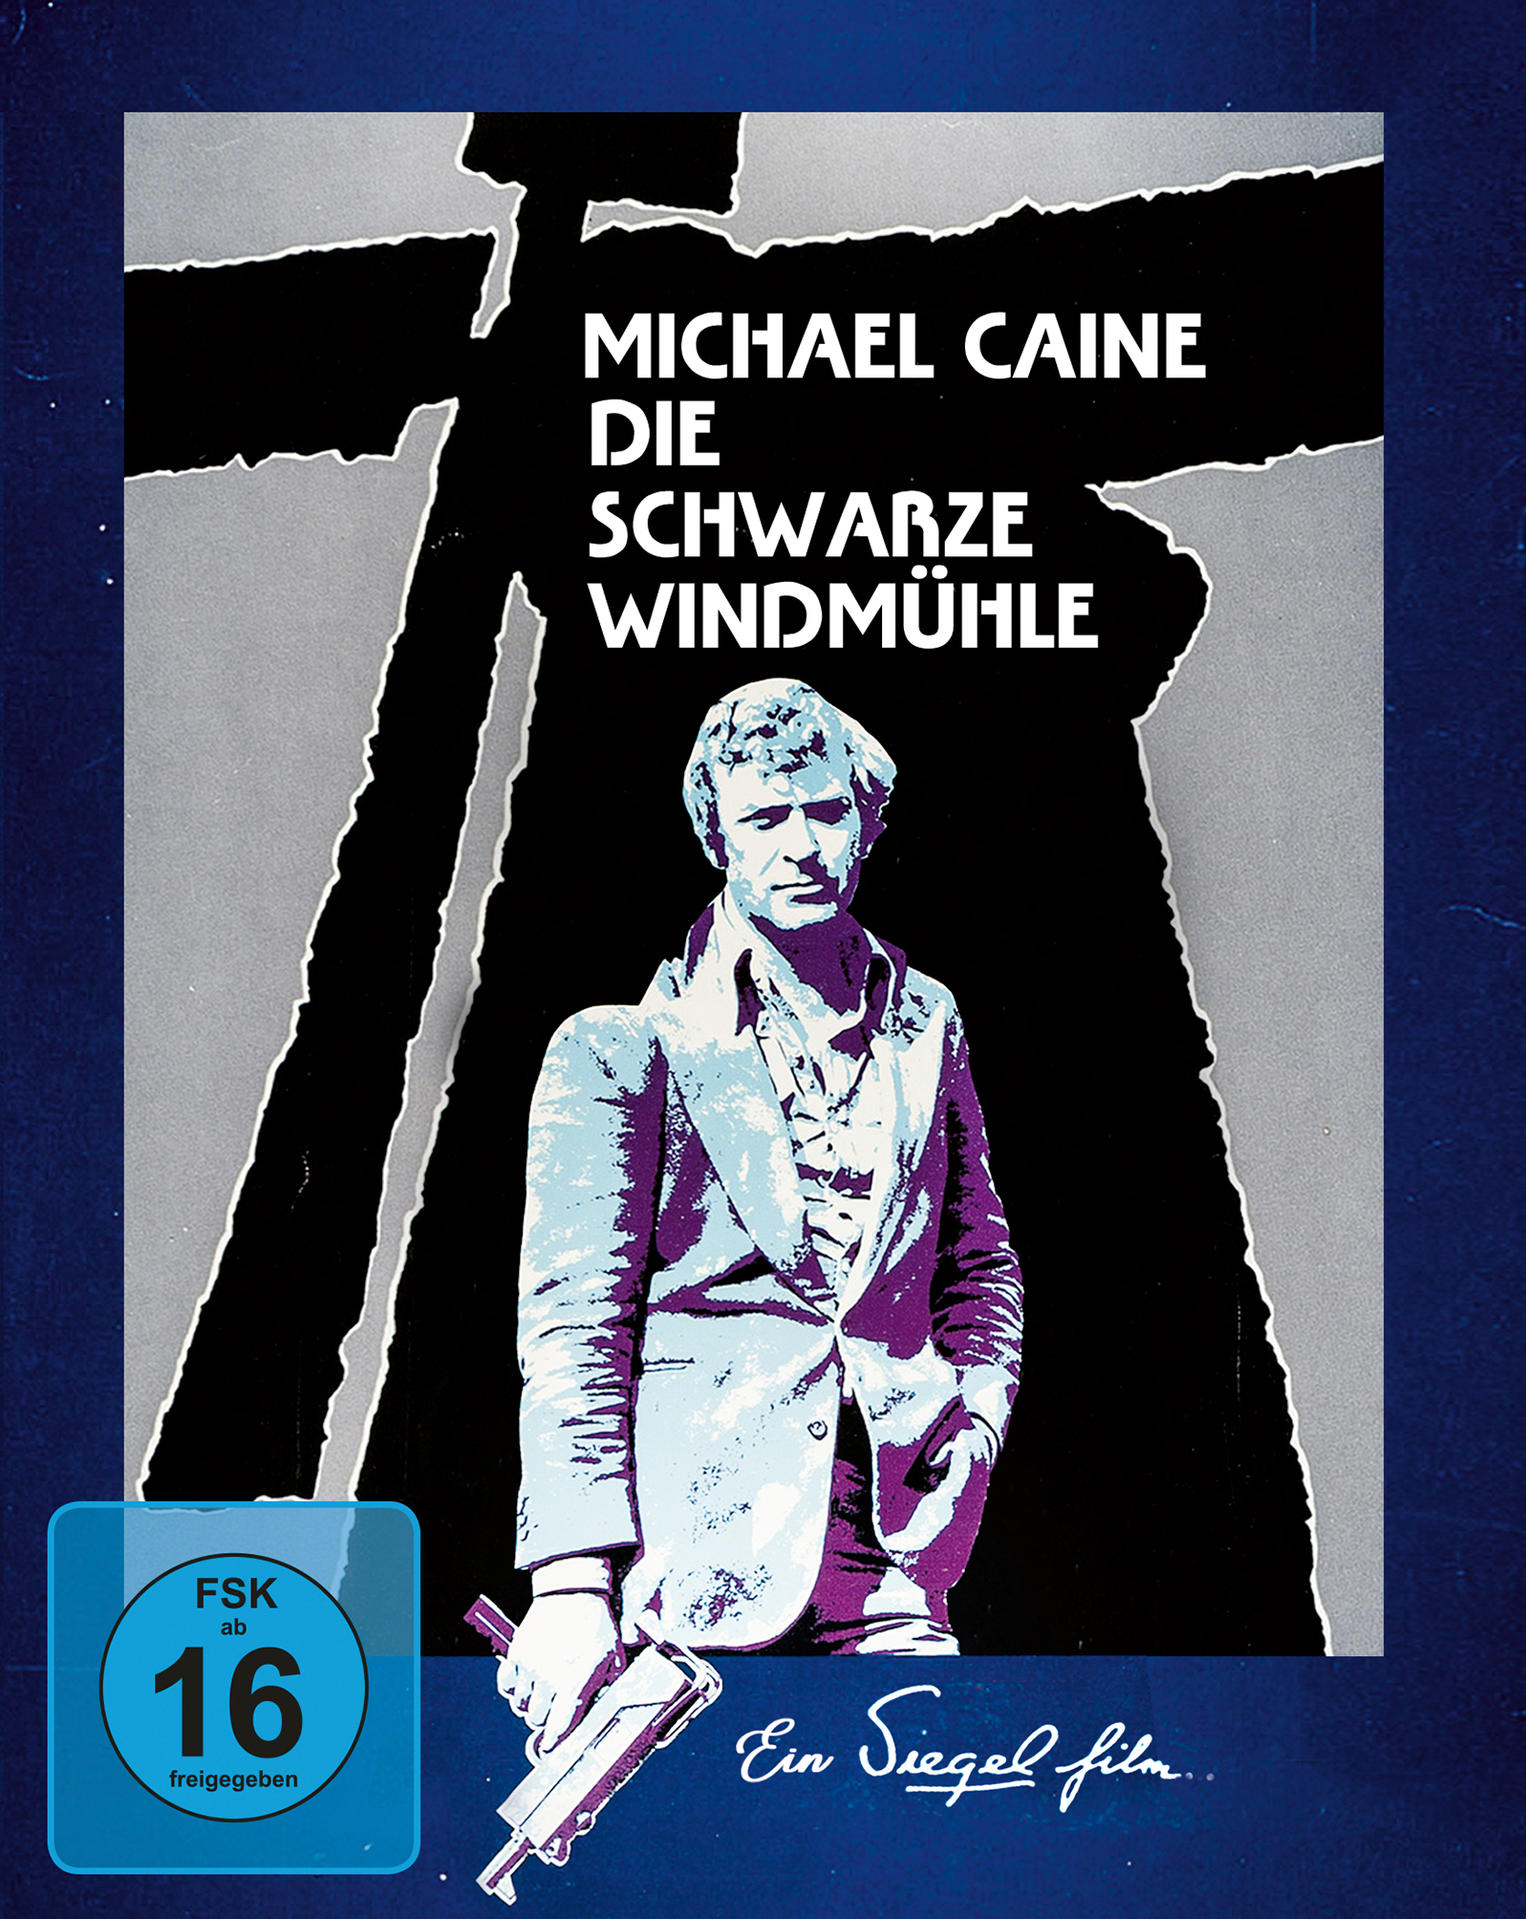 SCHWARZE DIE A/+DVD) + Blu-ray WINDMÜHLE(MB DVD